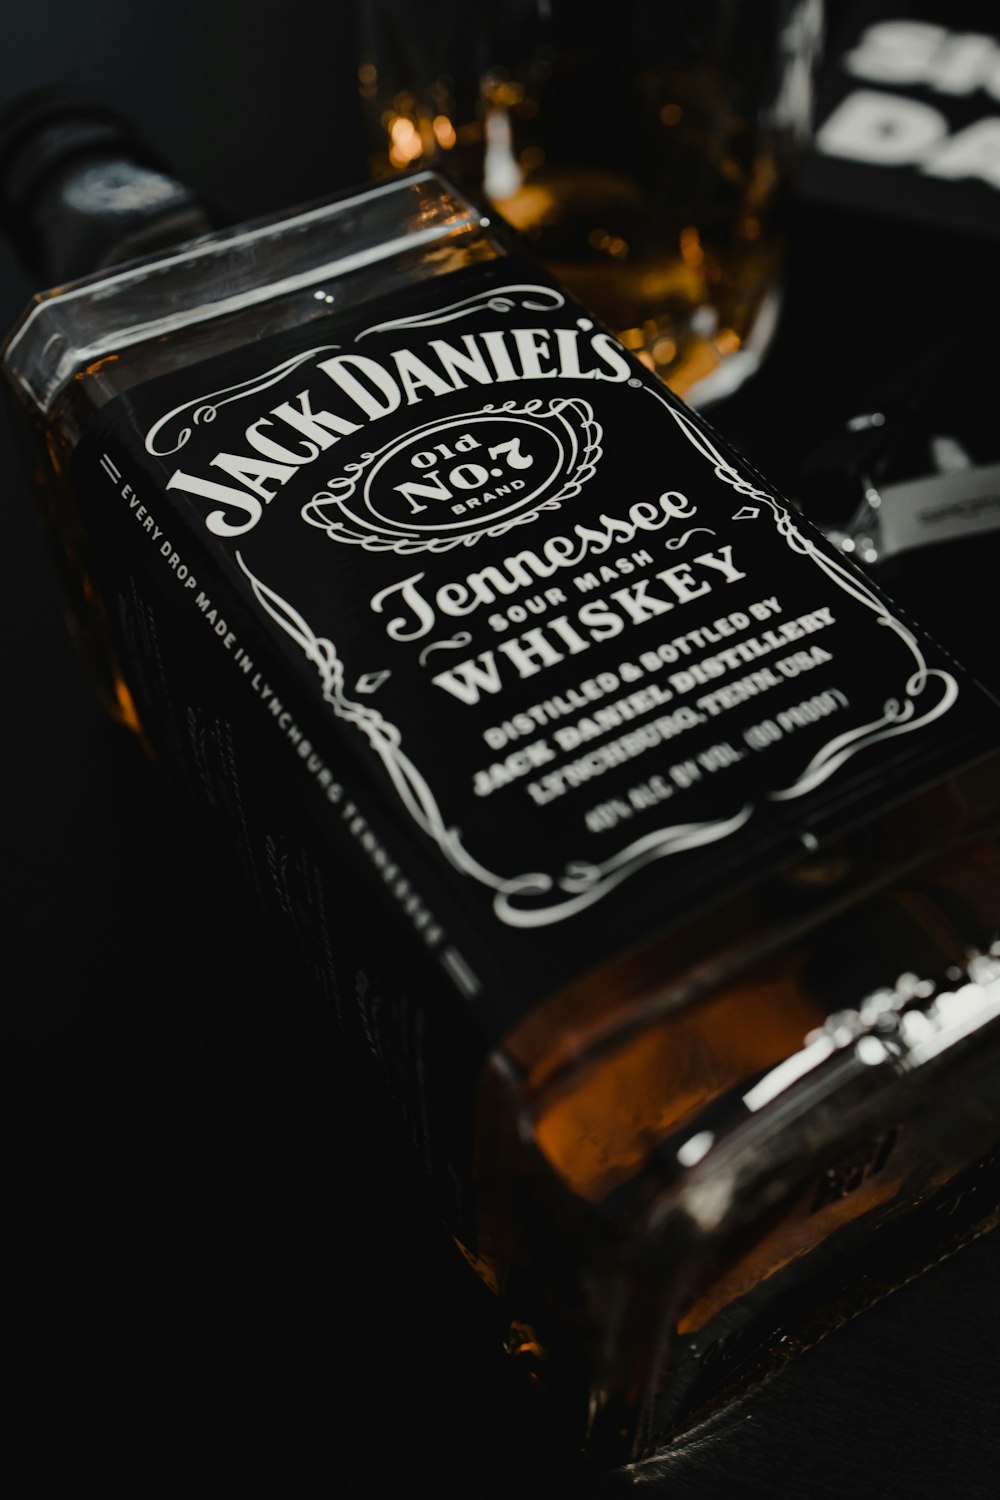 jack daniels old no 7 tennessee whiskey photo – Free Grey Image on Unsplash